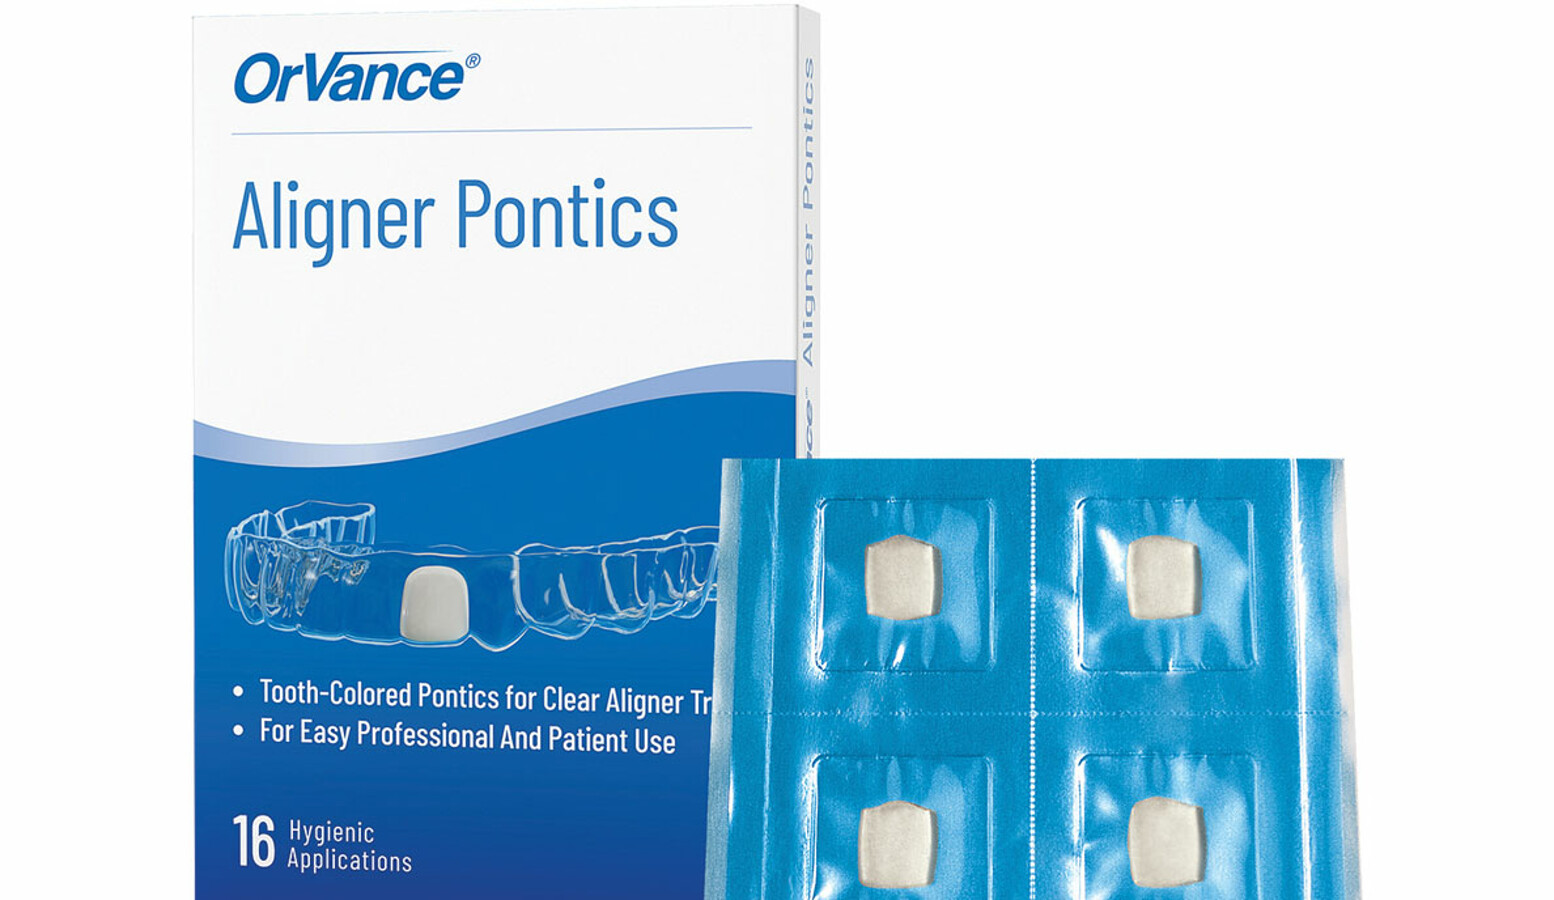 OrVance launches novel Aligner Pontics solution